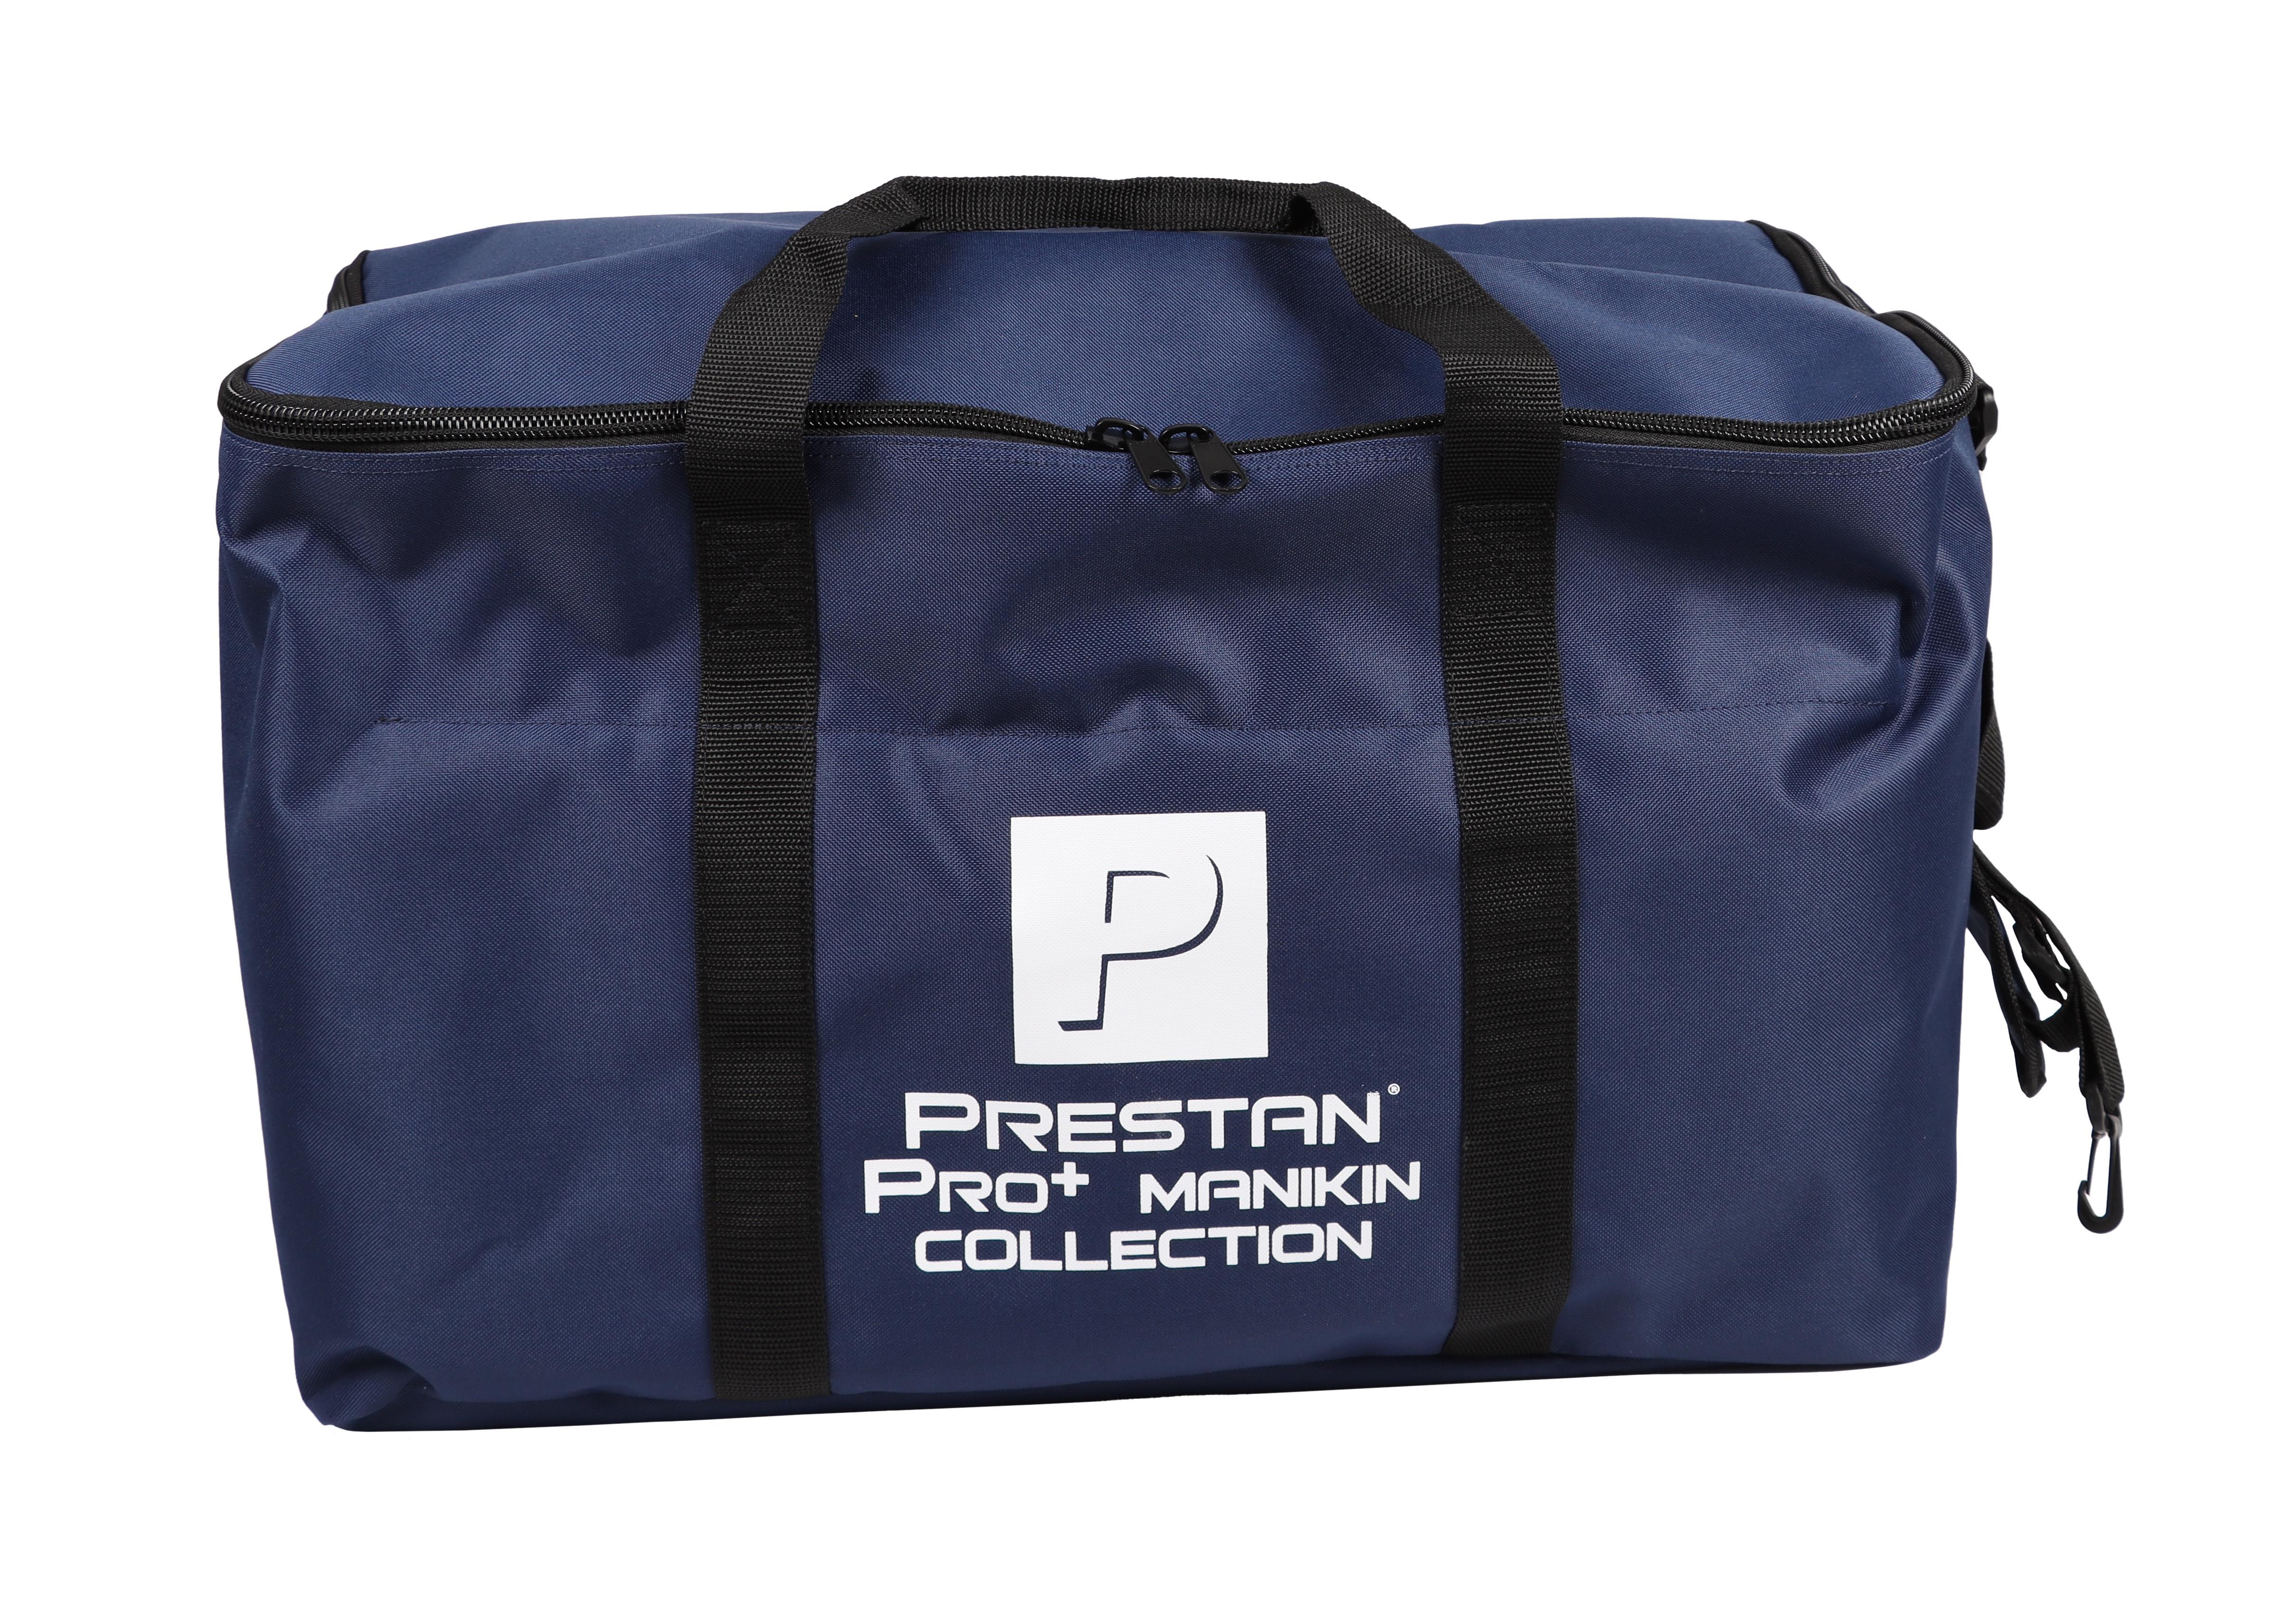 Prestan-Pro+-Collection-1